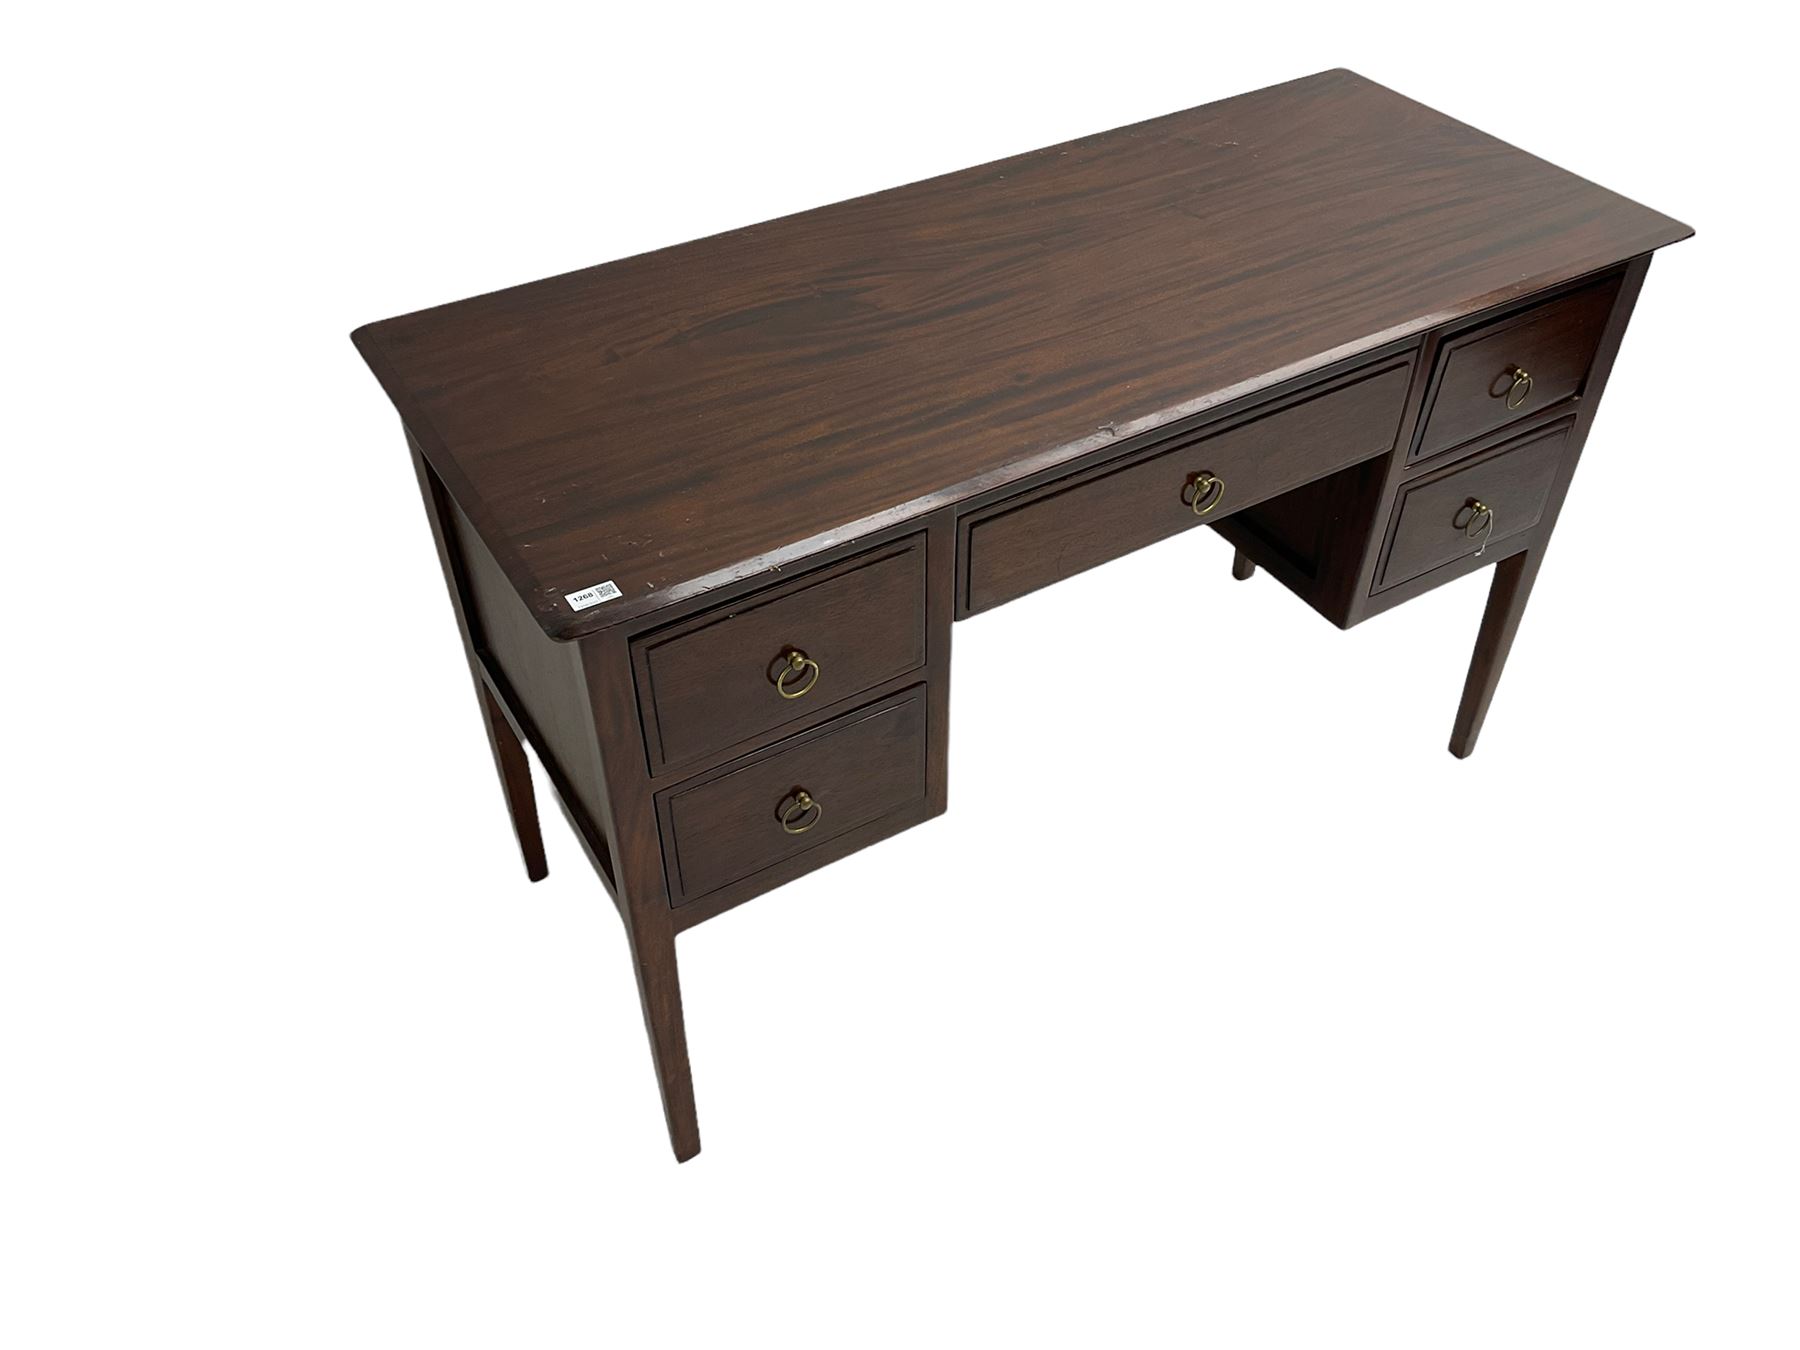 Hardwood kneehole dressing table or desk - Image 9 of 10